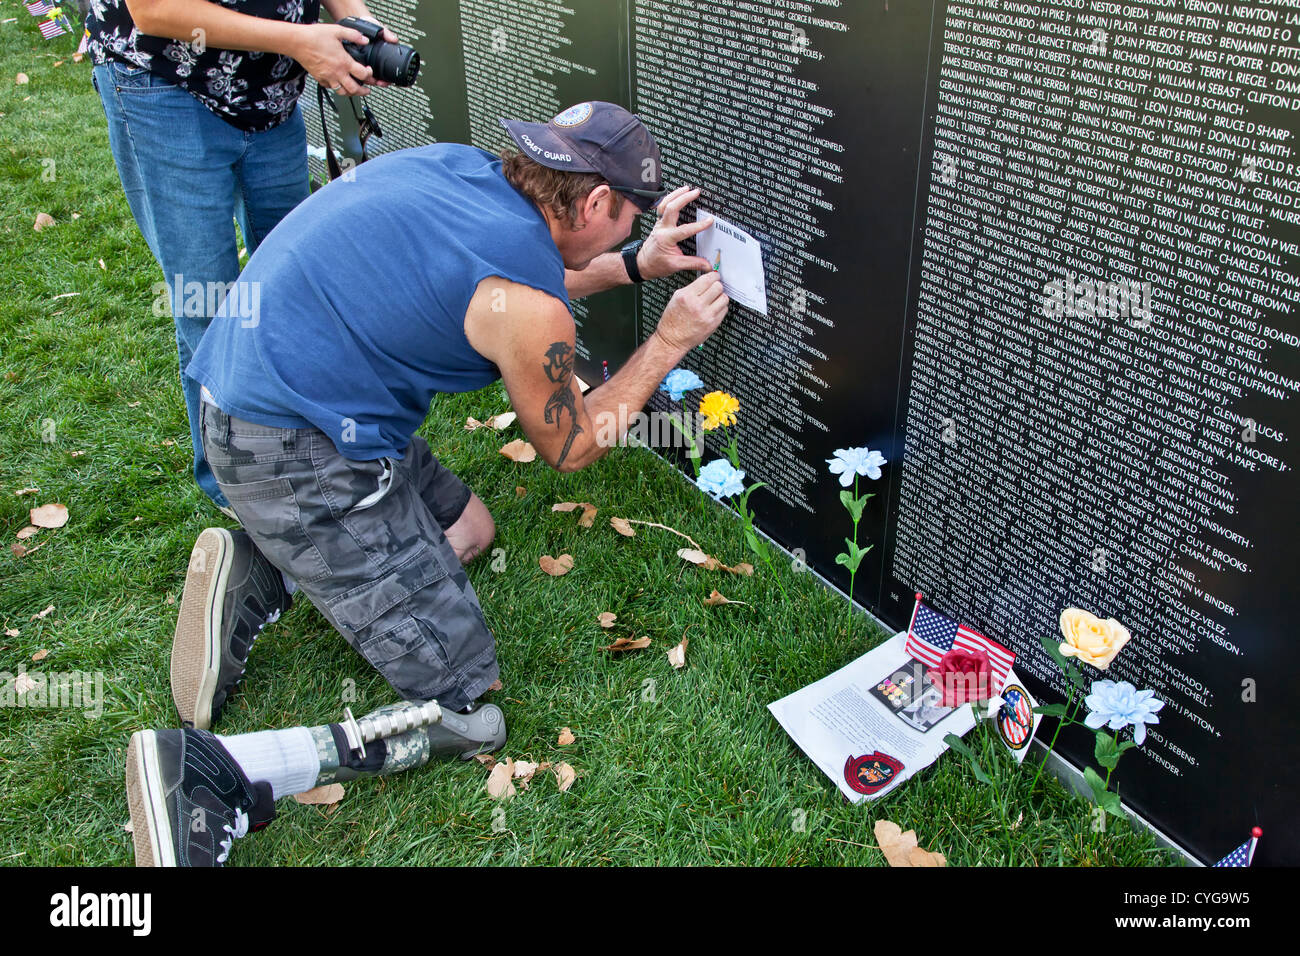 Golf-Krieg-Veteran statt reiben, Vietnam Reisen War Memorial Wall. Stockfoto